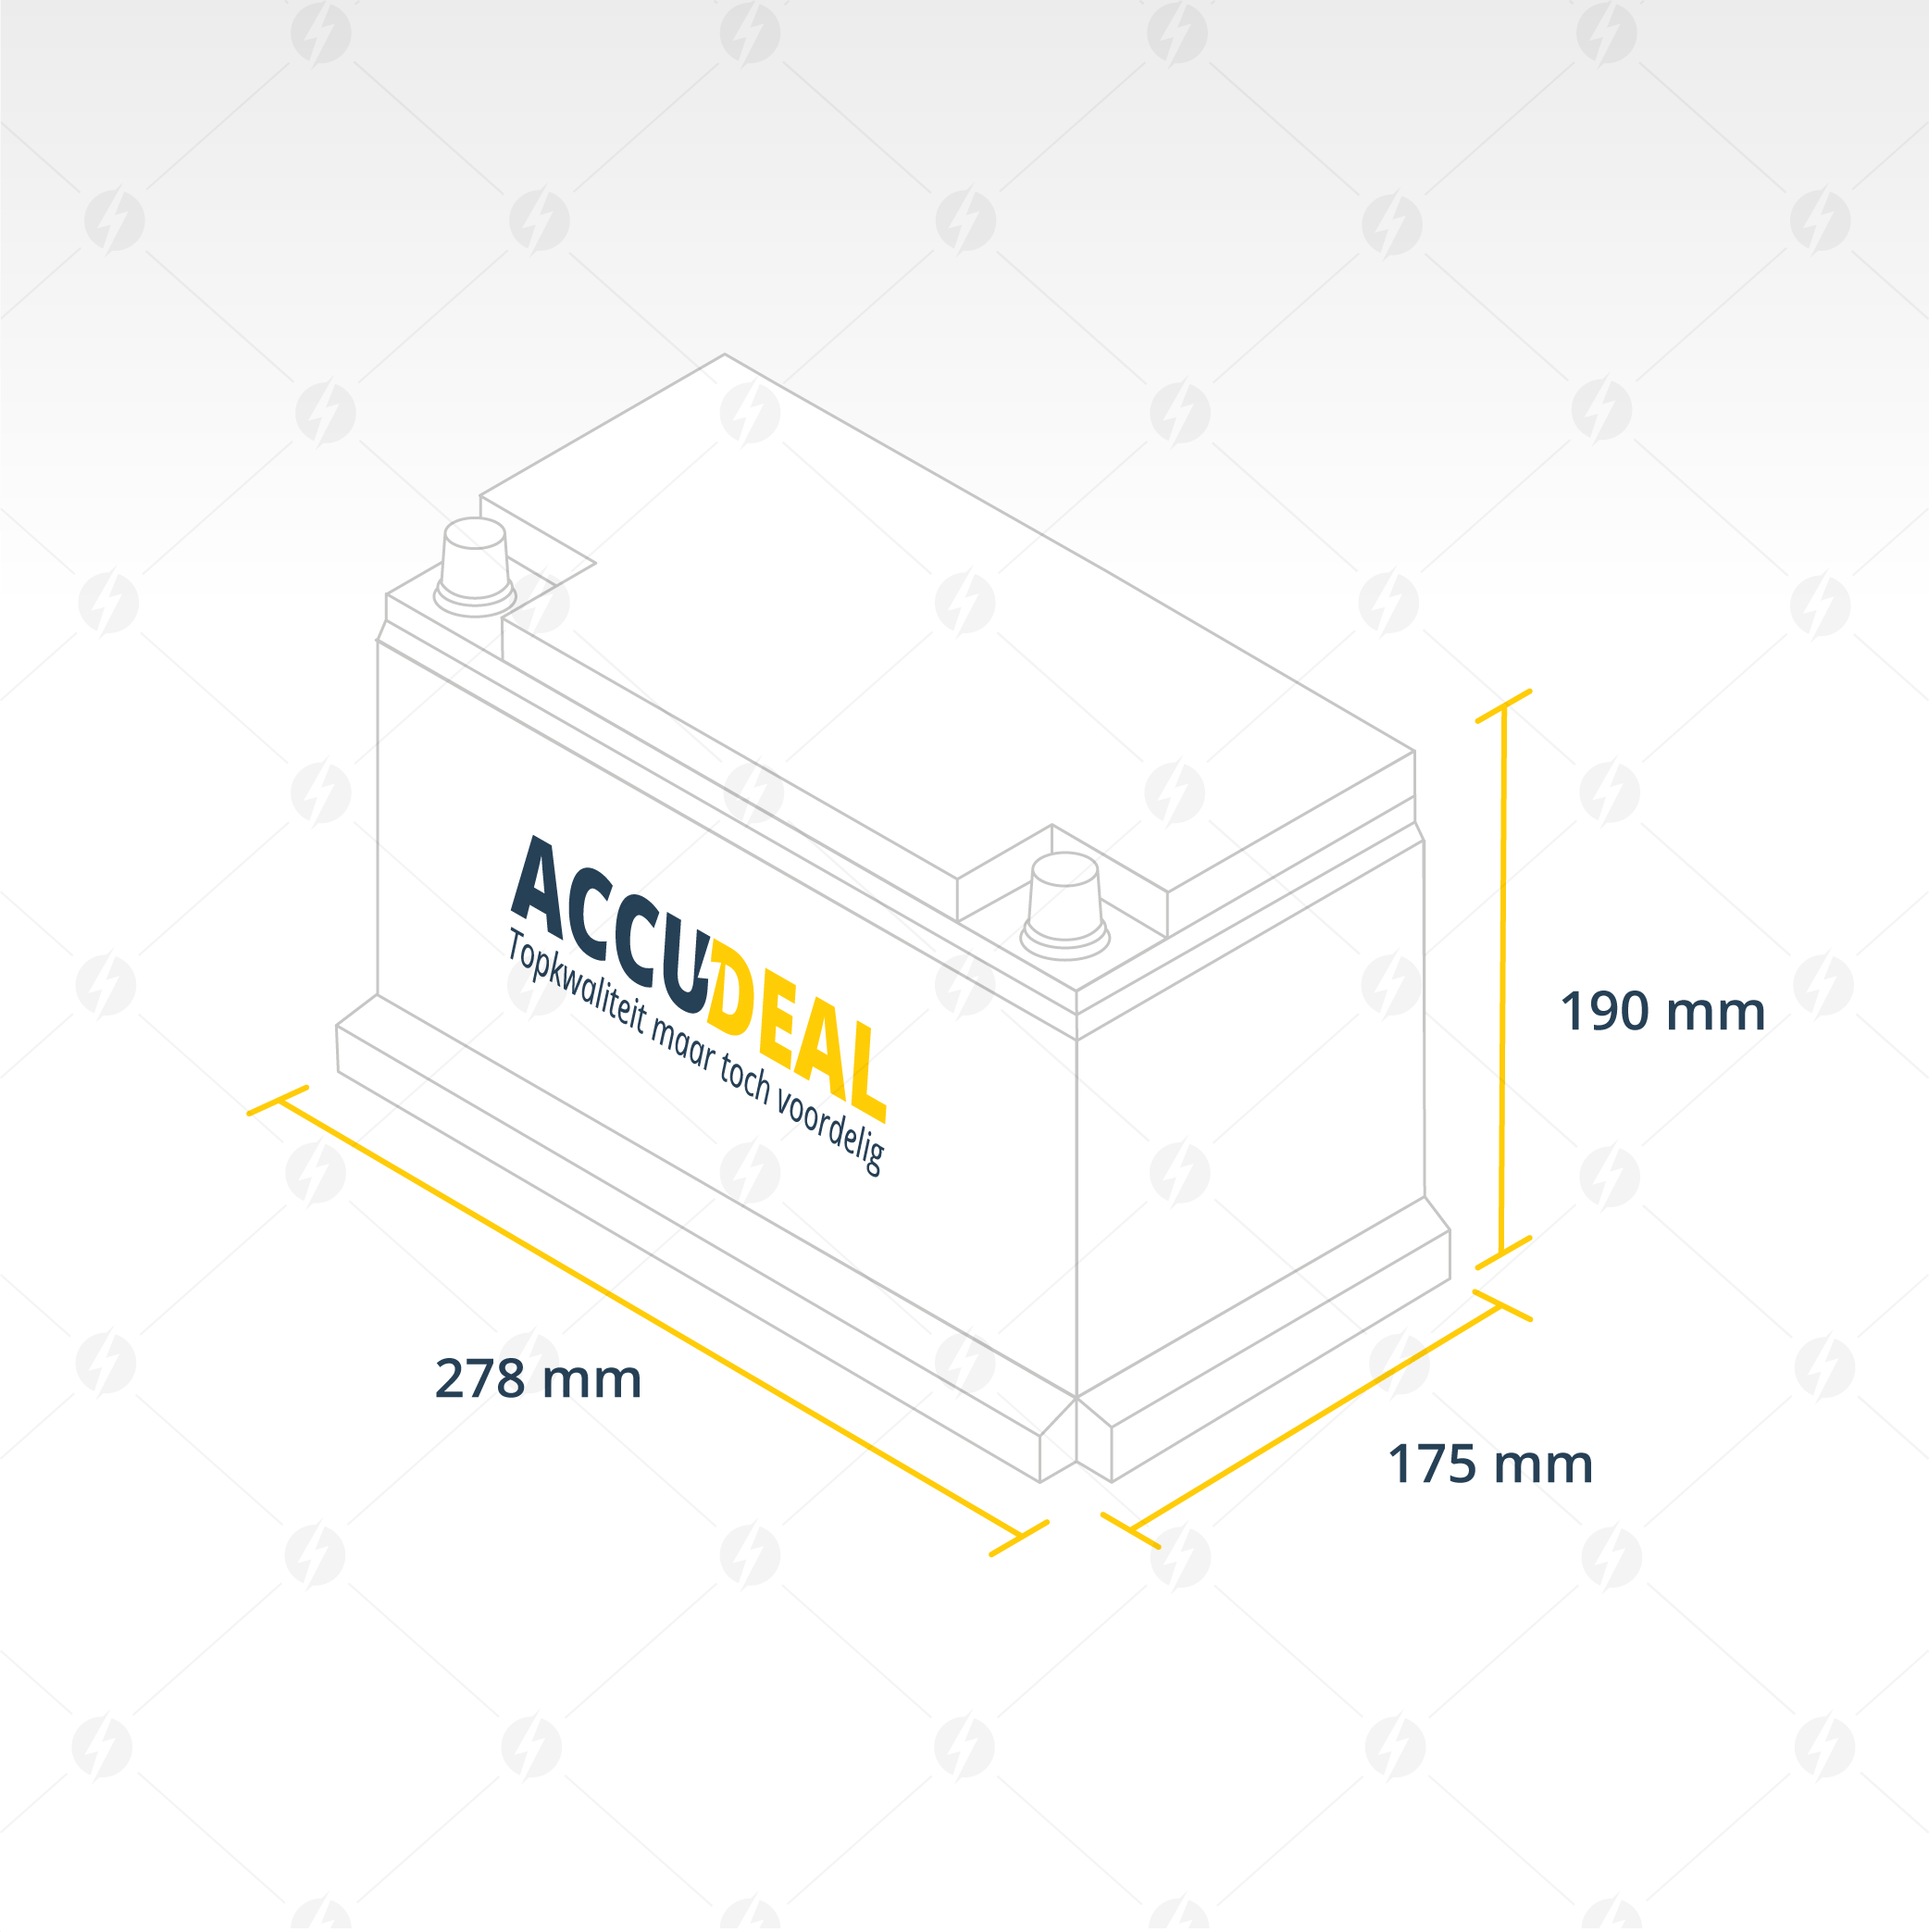 Bosch S5A08 - 70Ah accu, 760A, 12V (0 092 S5A 080) - Accudeal